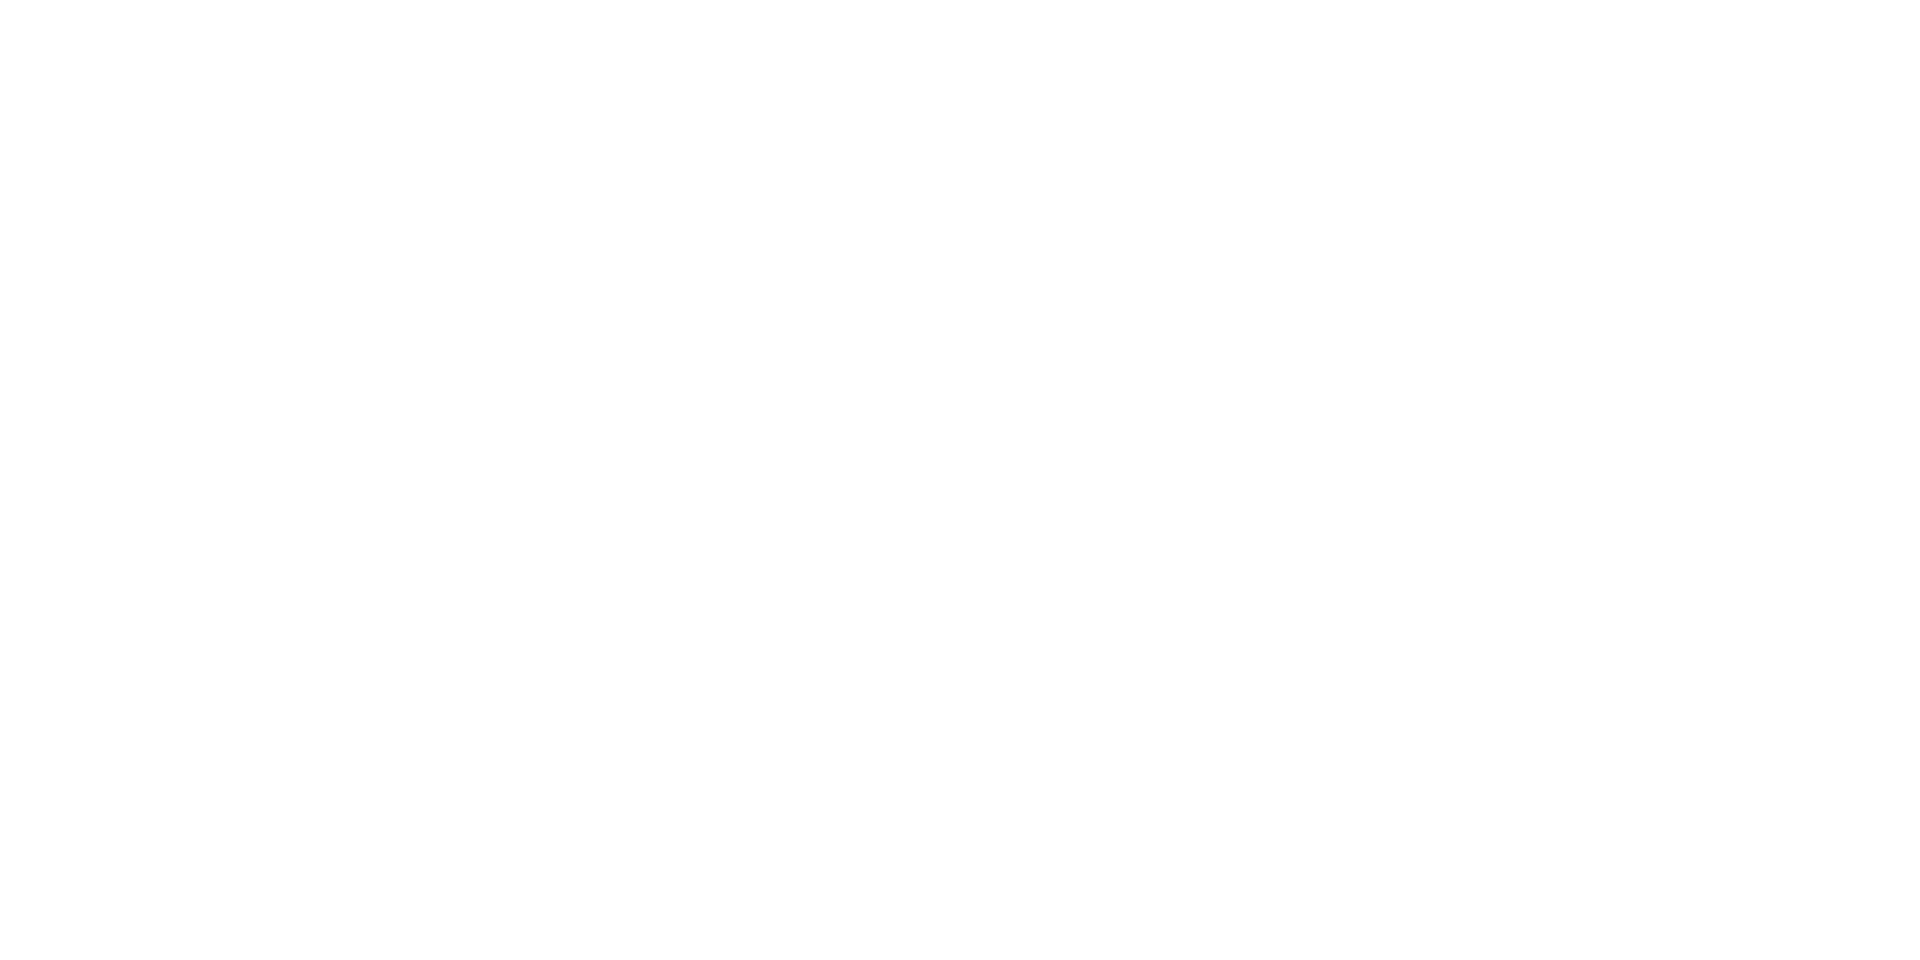 Bosworths Landscaping